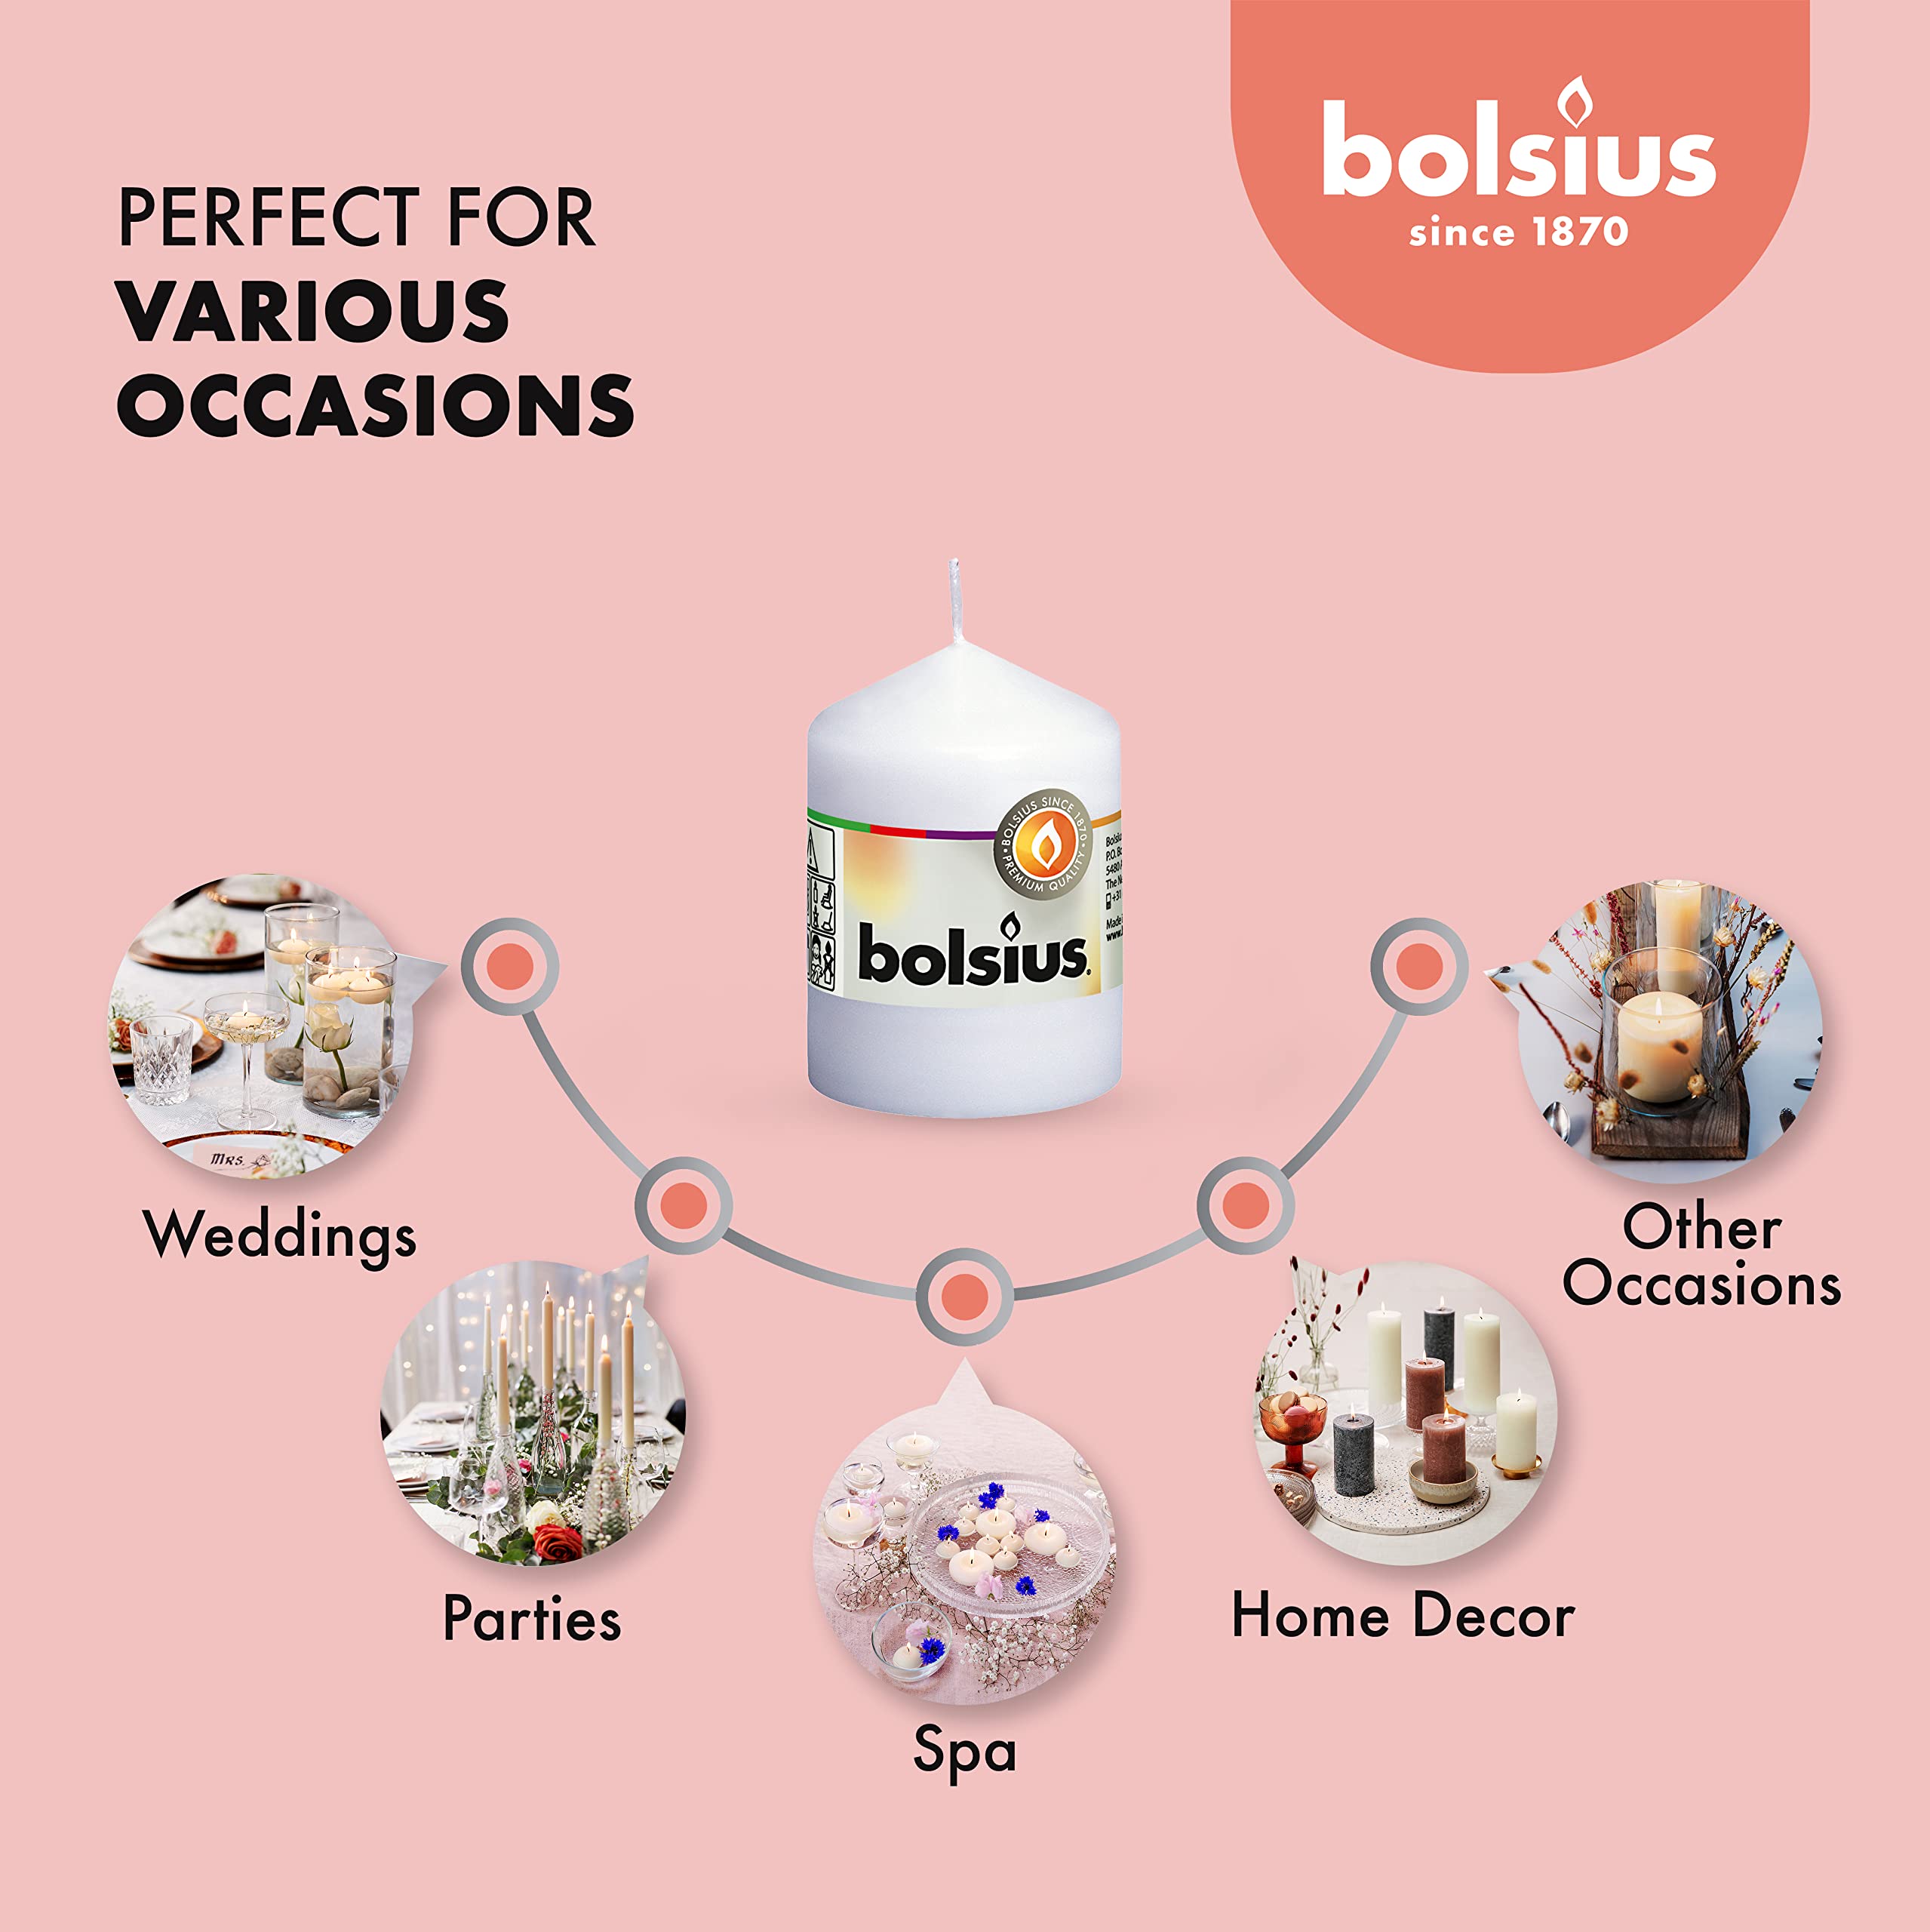 BOLSIUS 10 Pillar Candles - 2.25 x 3.25 Inches - Premium European Quality - Individually Wrapped  - Acceptable